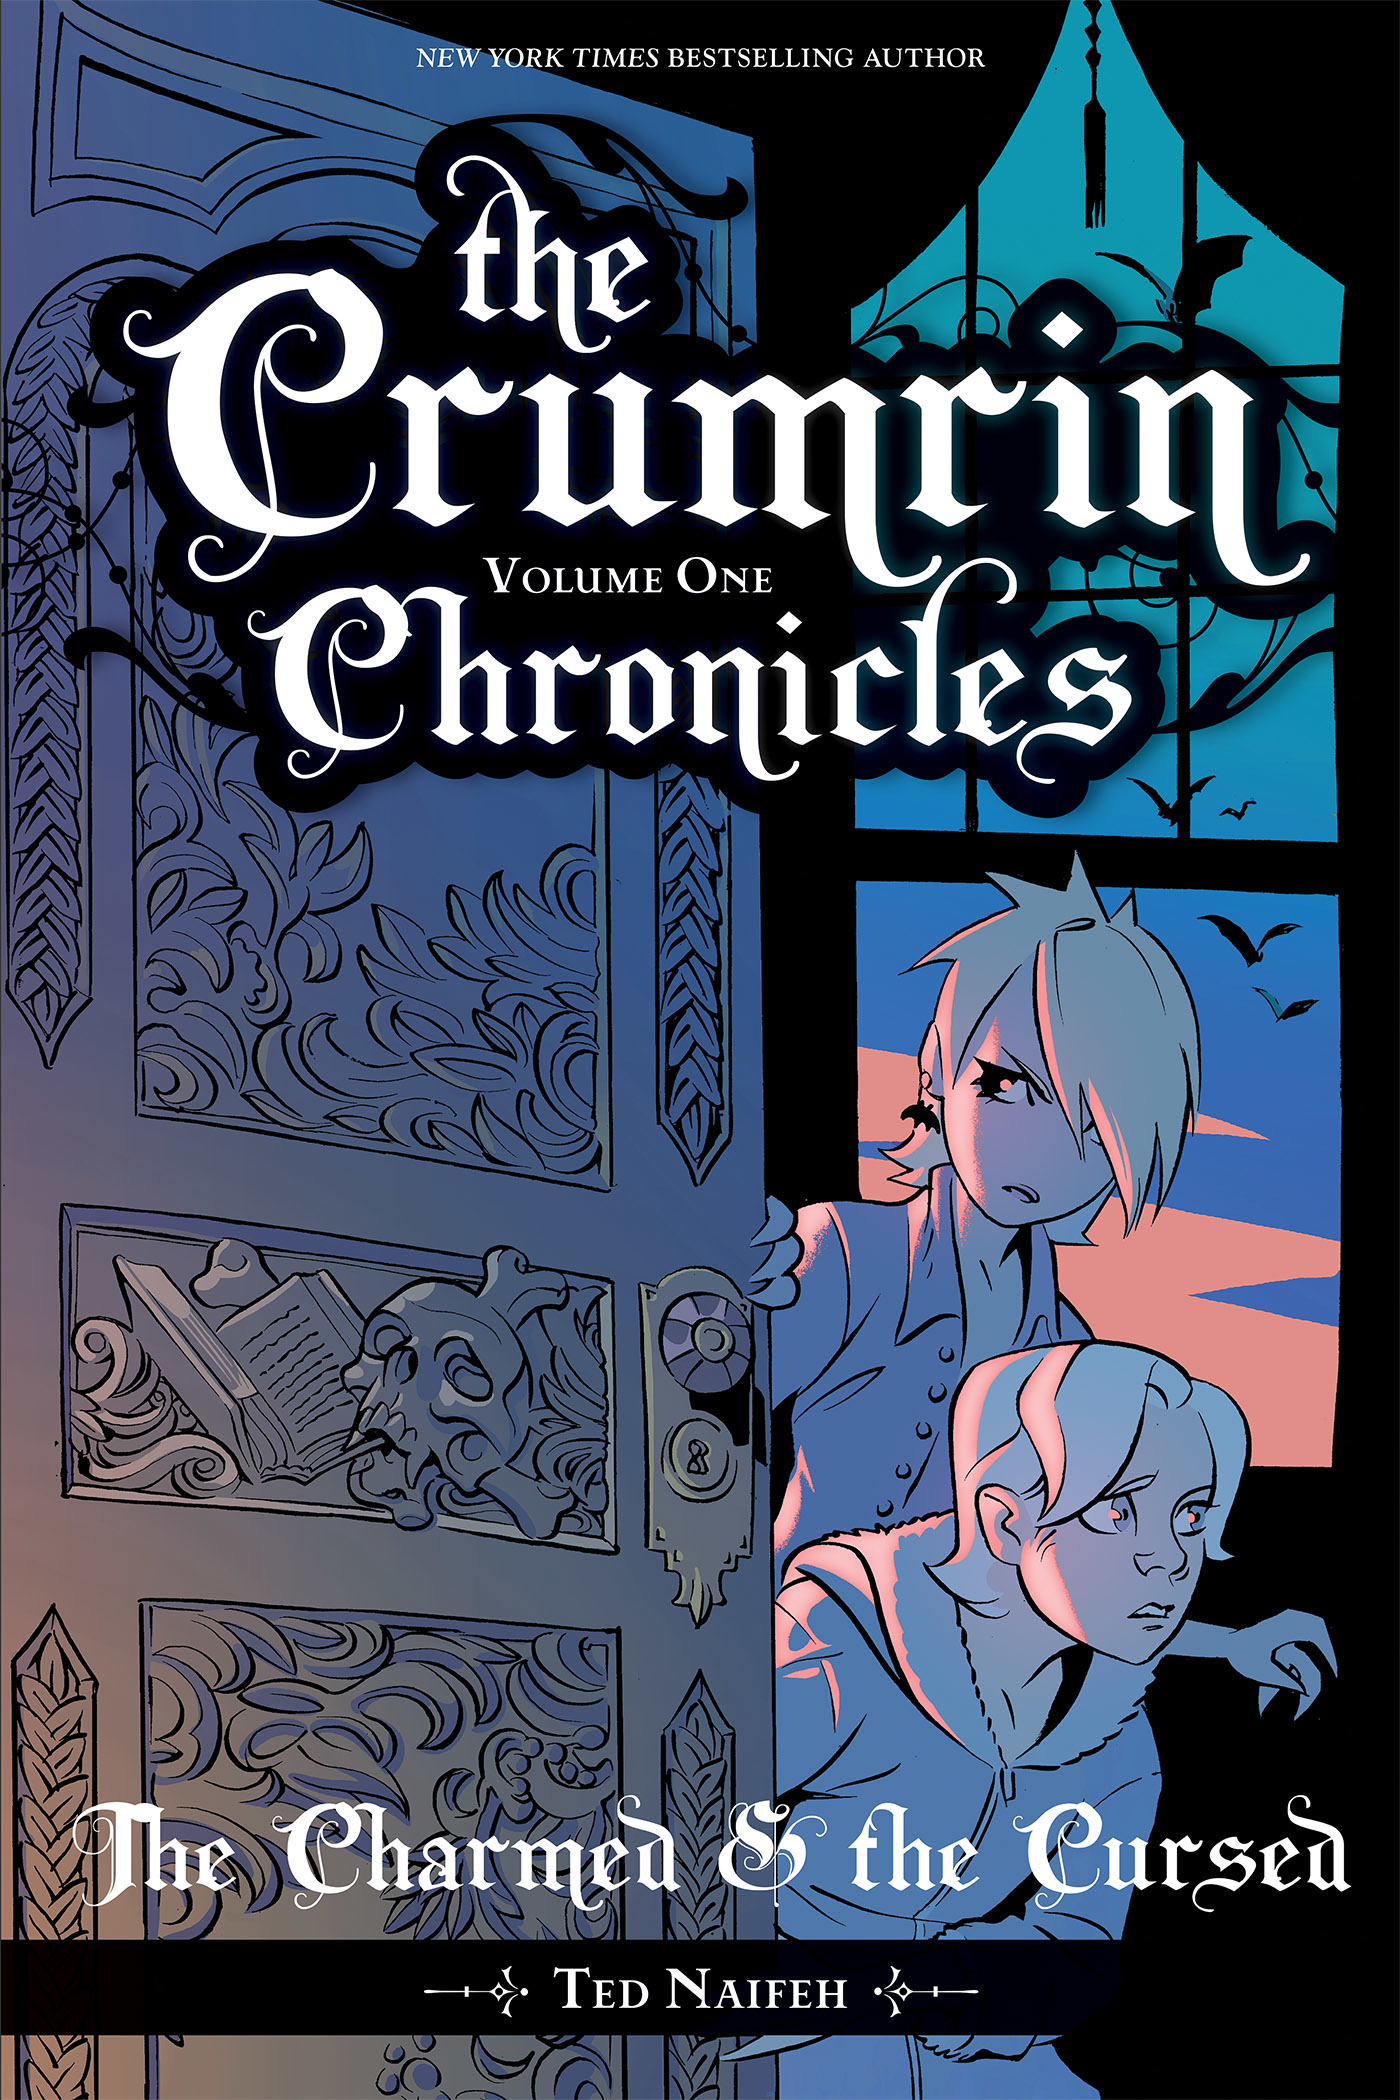 Crumrin Chronicles Graphic Novel Volume 1